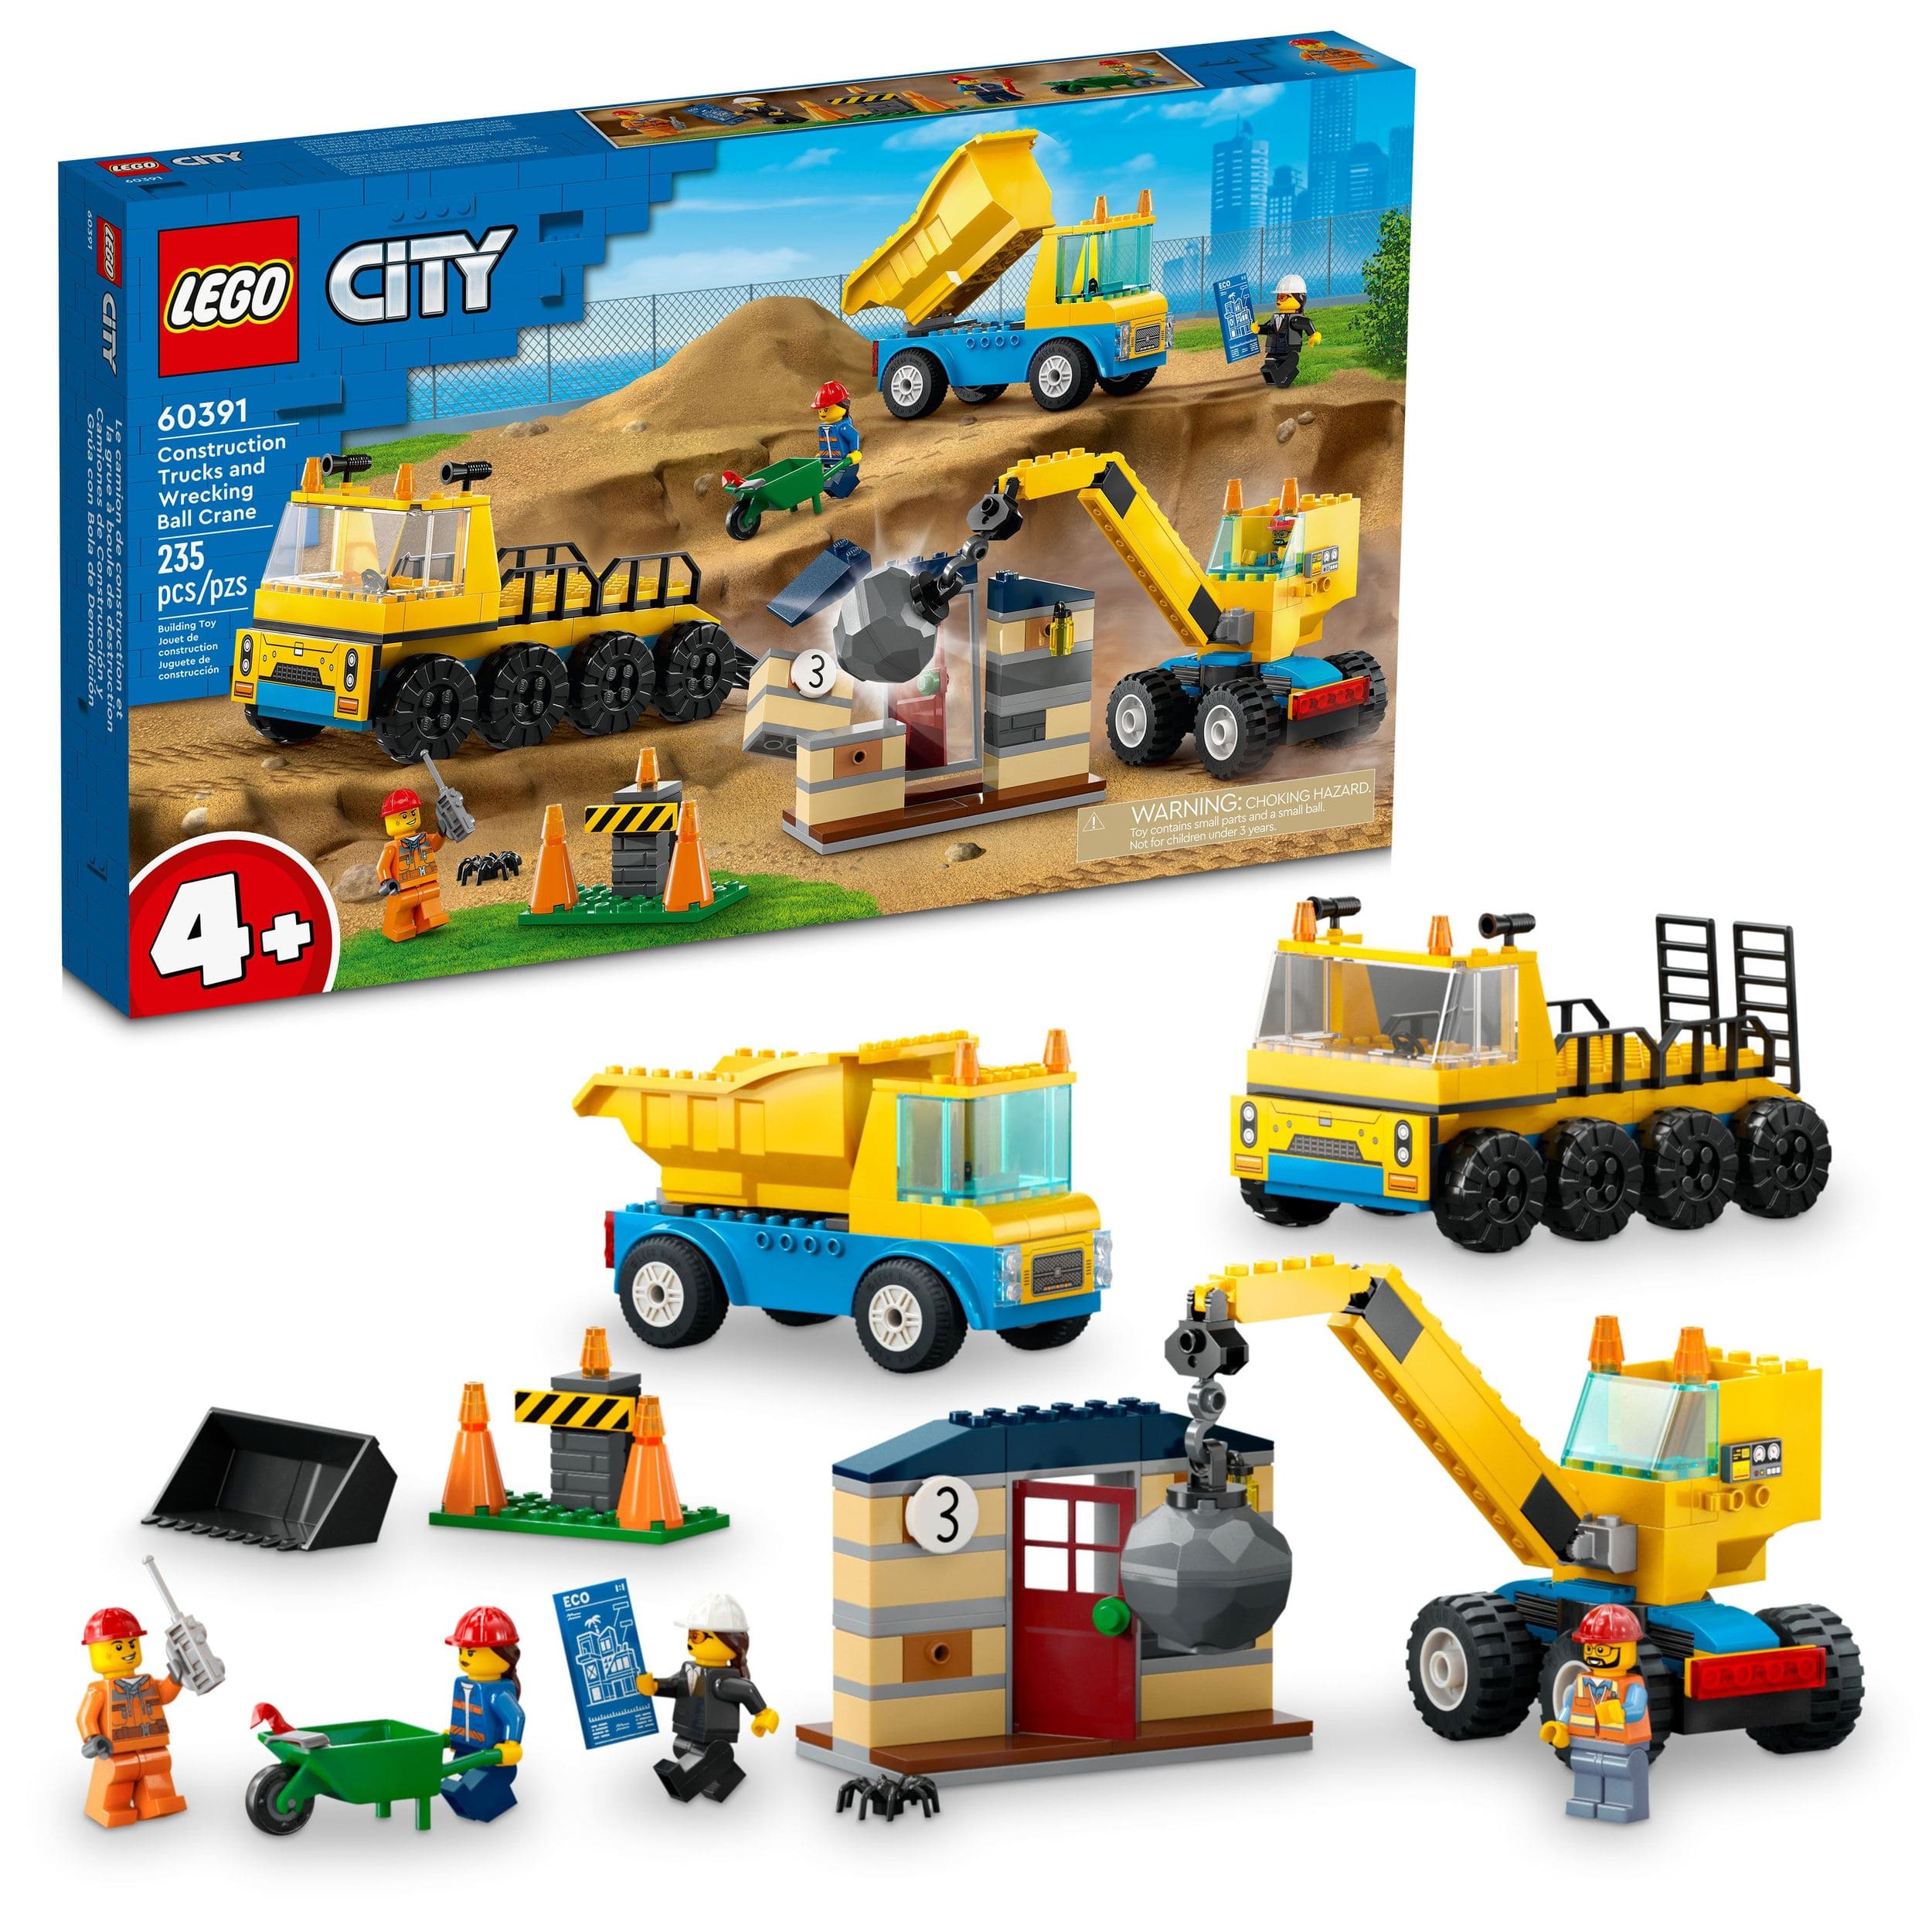 LEGO® City Construction Trucks and Wrecking Ball Crane - 60391